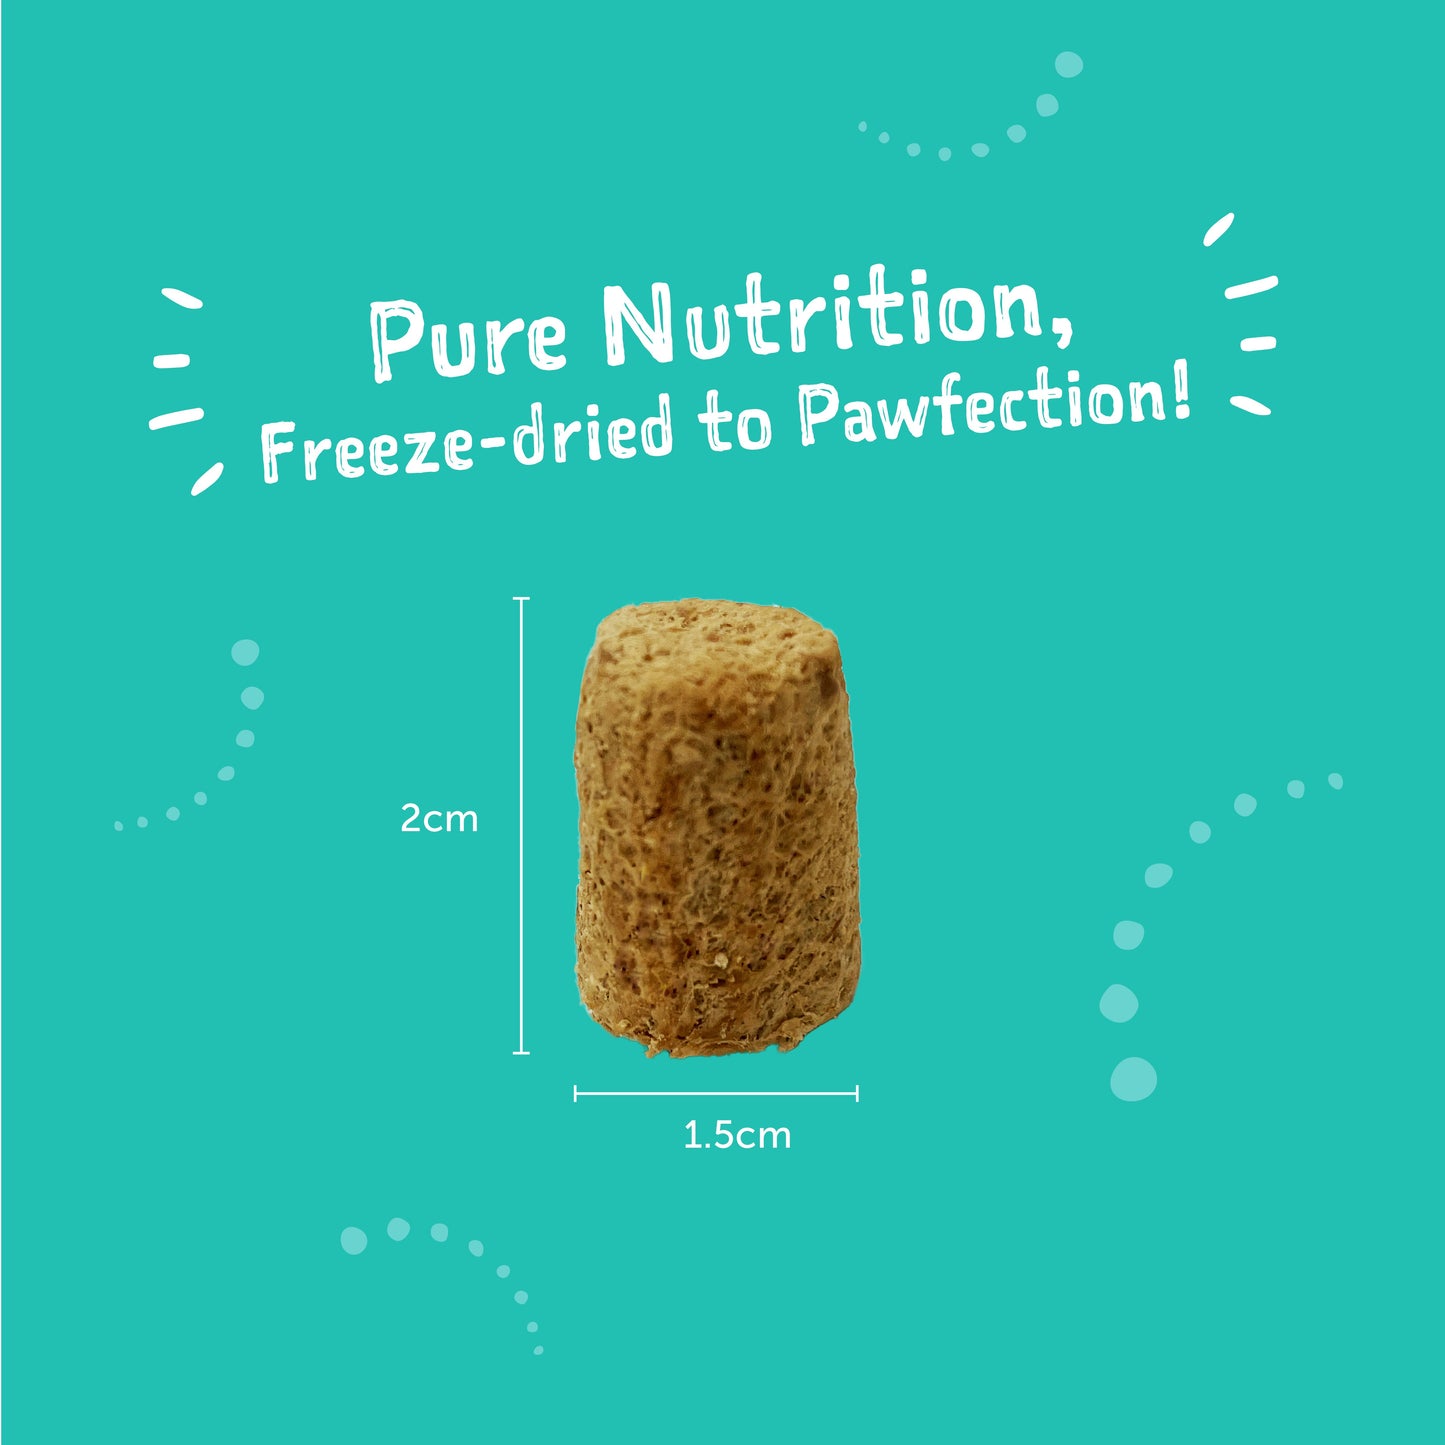 Loveabowl Freeze-a-Bowl Freeze-dried Raw Food (Sample 5g x 3 Packs)